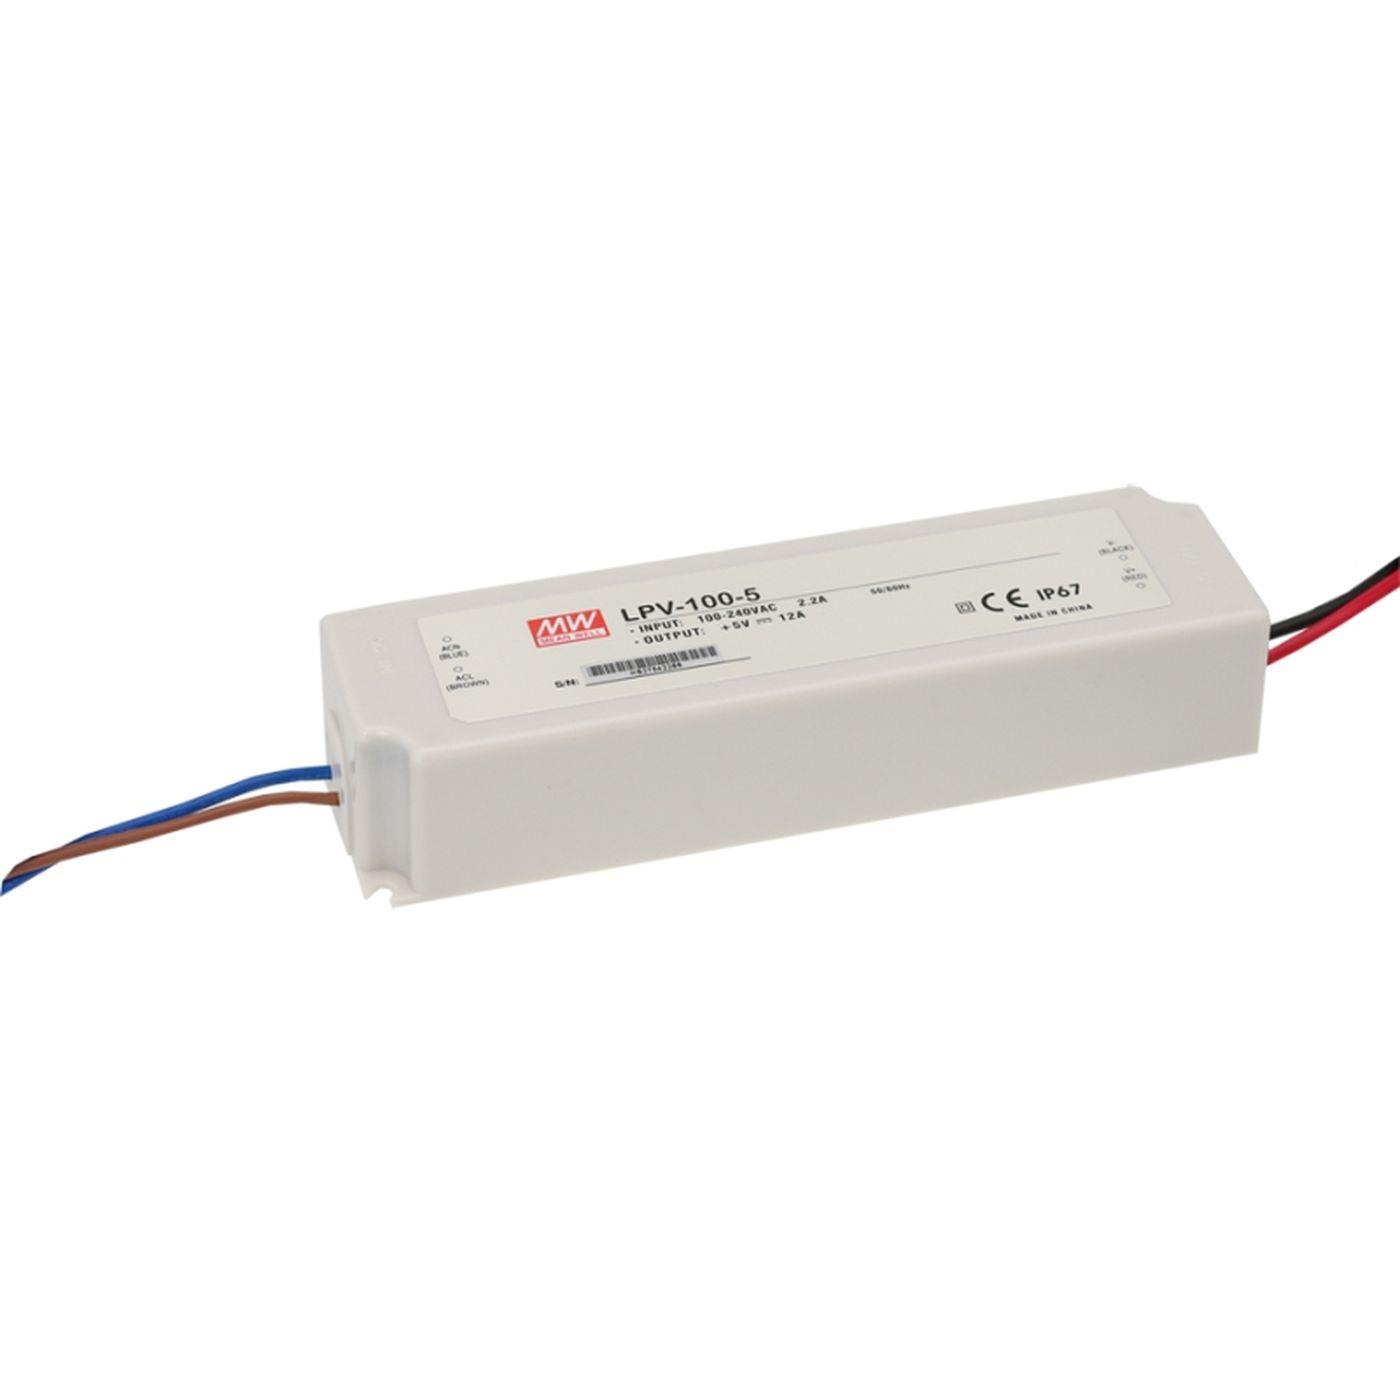 LPV-100-12 100W 12V 8,5A LED power supply Transformer Driver IP67